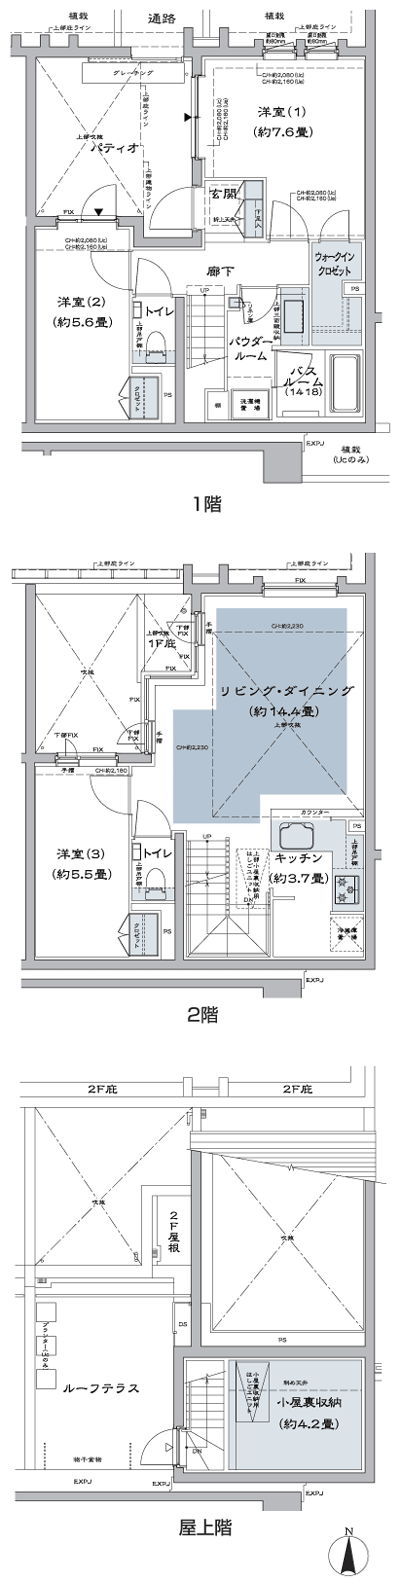 Floor: 3LD ・ K + WIC (walk-in closet) + attic storage, occupied area: 90.53 sq m, price: 76 million yen, currently on sale